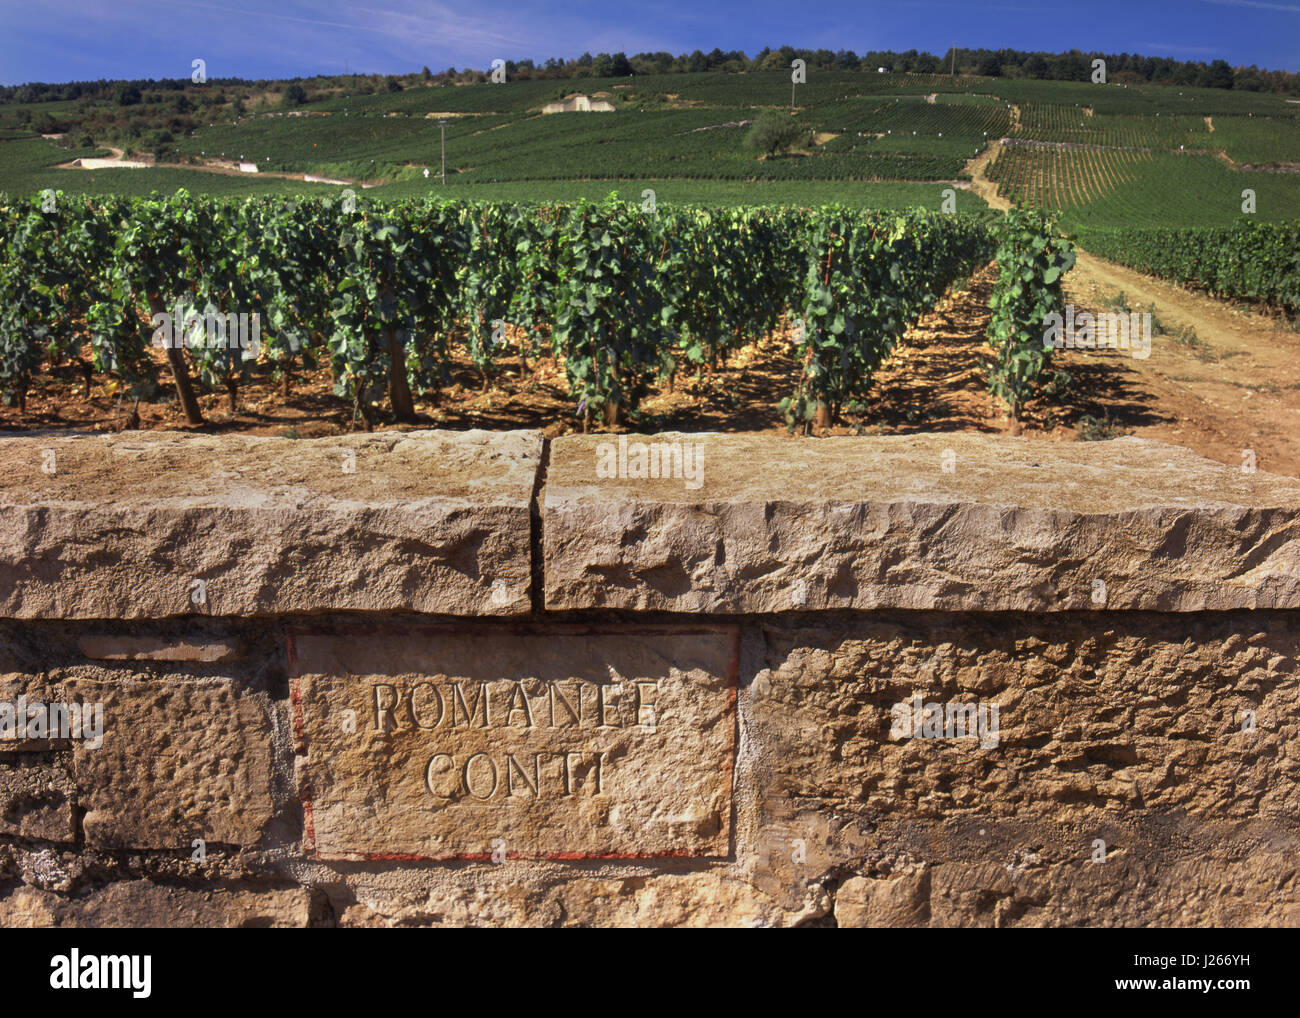 Steintafel des Weinbergs Romaneé-Conti an der Grenzmauer des weltberühmten Weinbergs Romaneé-Conti, Vosne-Romanée, Côte d'Or, Frankreich. Stockfoto